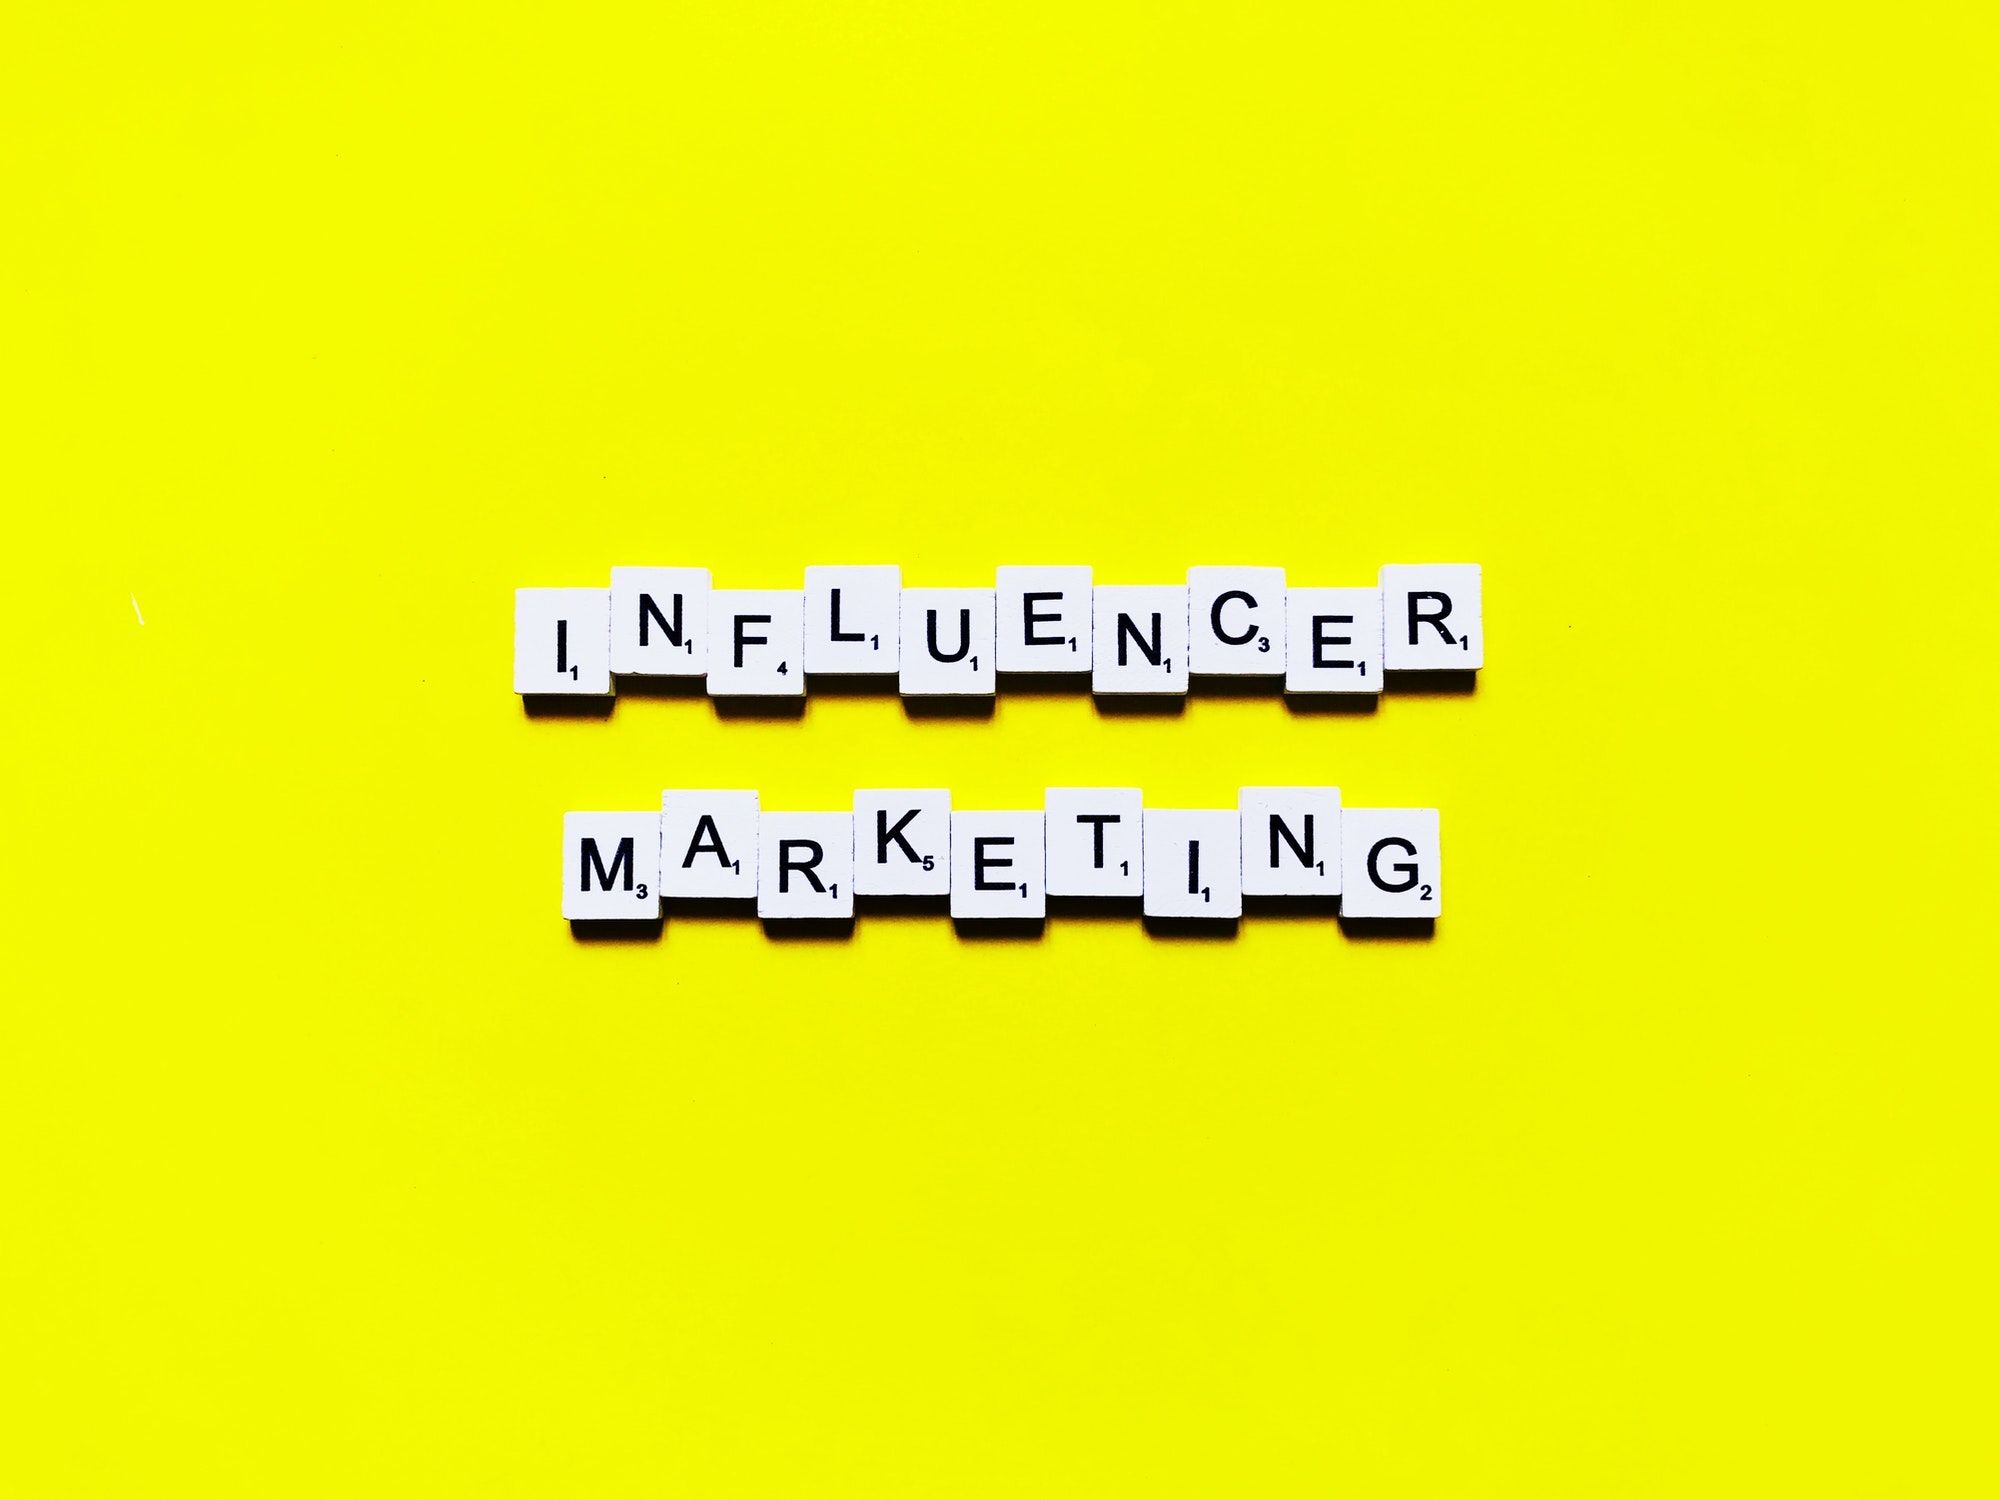 Influencer marketing